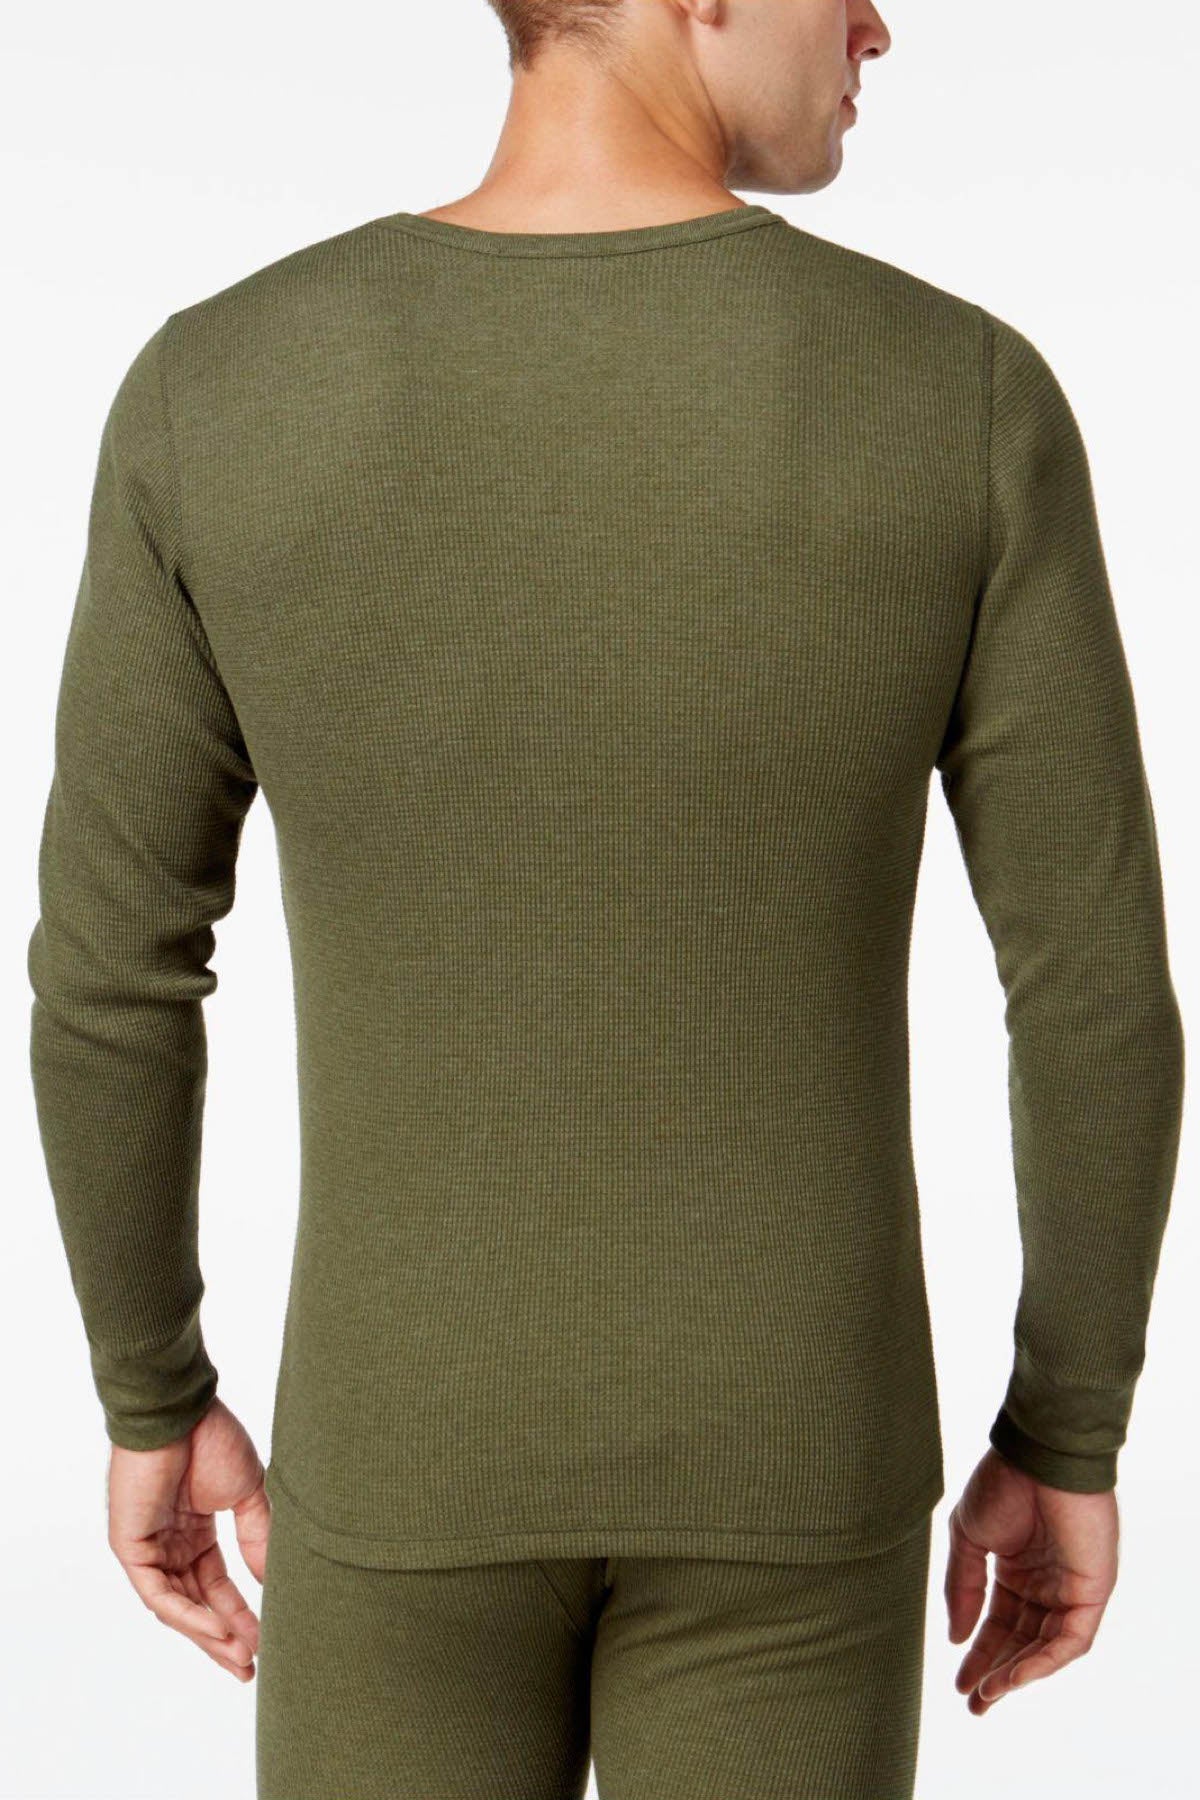 Alfani Fatigue Green Thermal Knit Waffle Crew-Neck Shirt